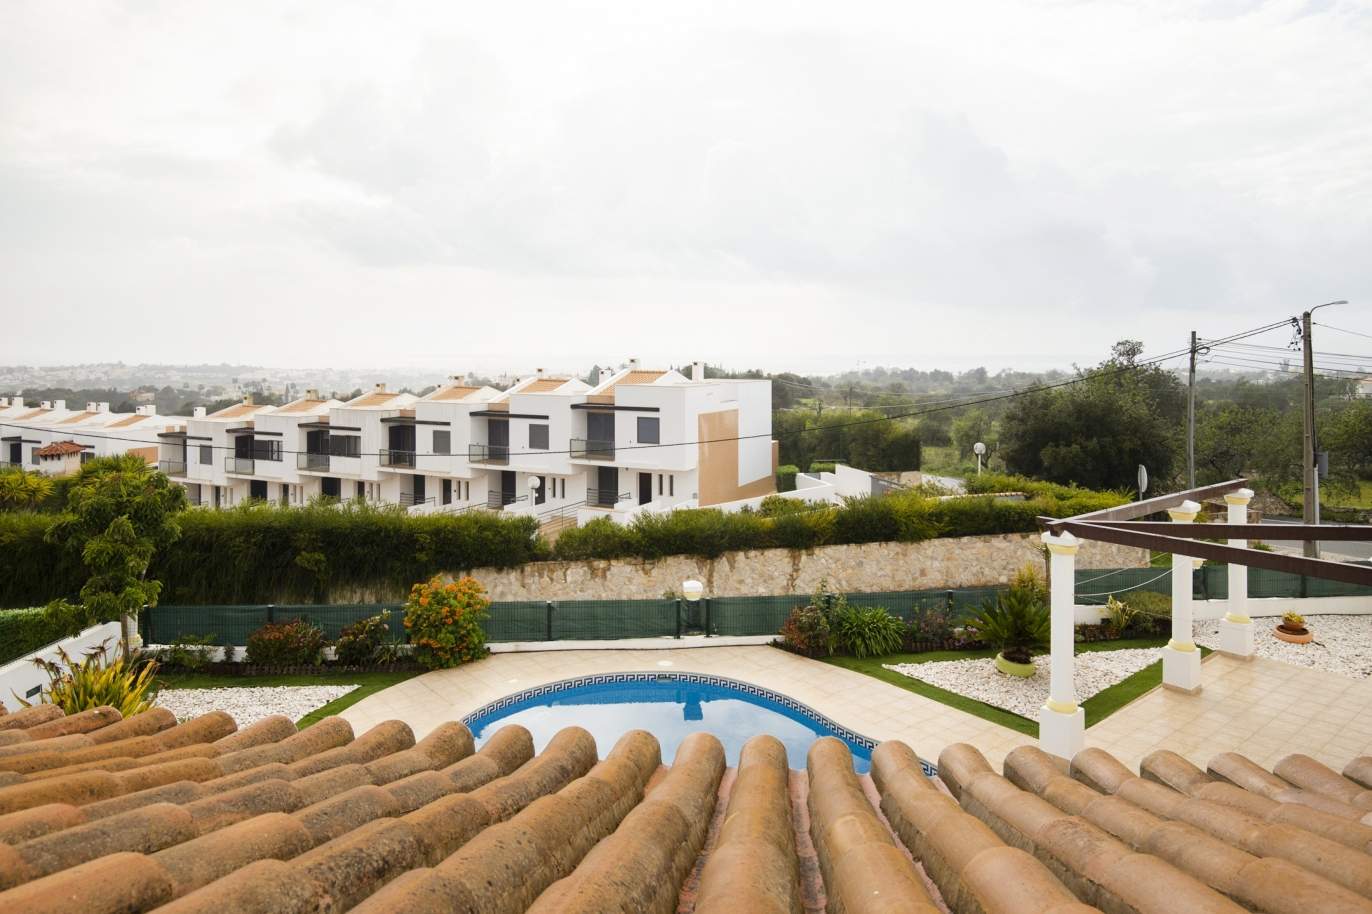 4 Bedroom Villa with swimming pool, for sale, in Albufeira, Algarve_196121